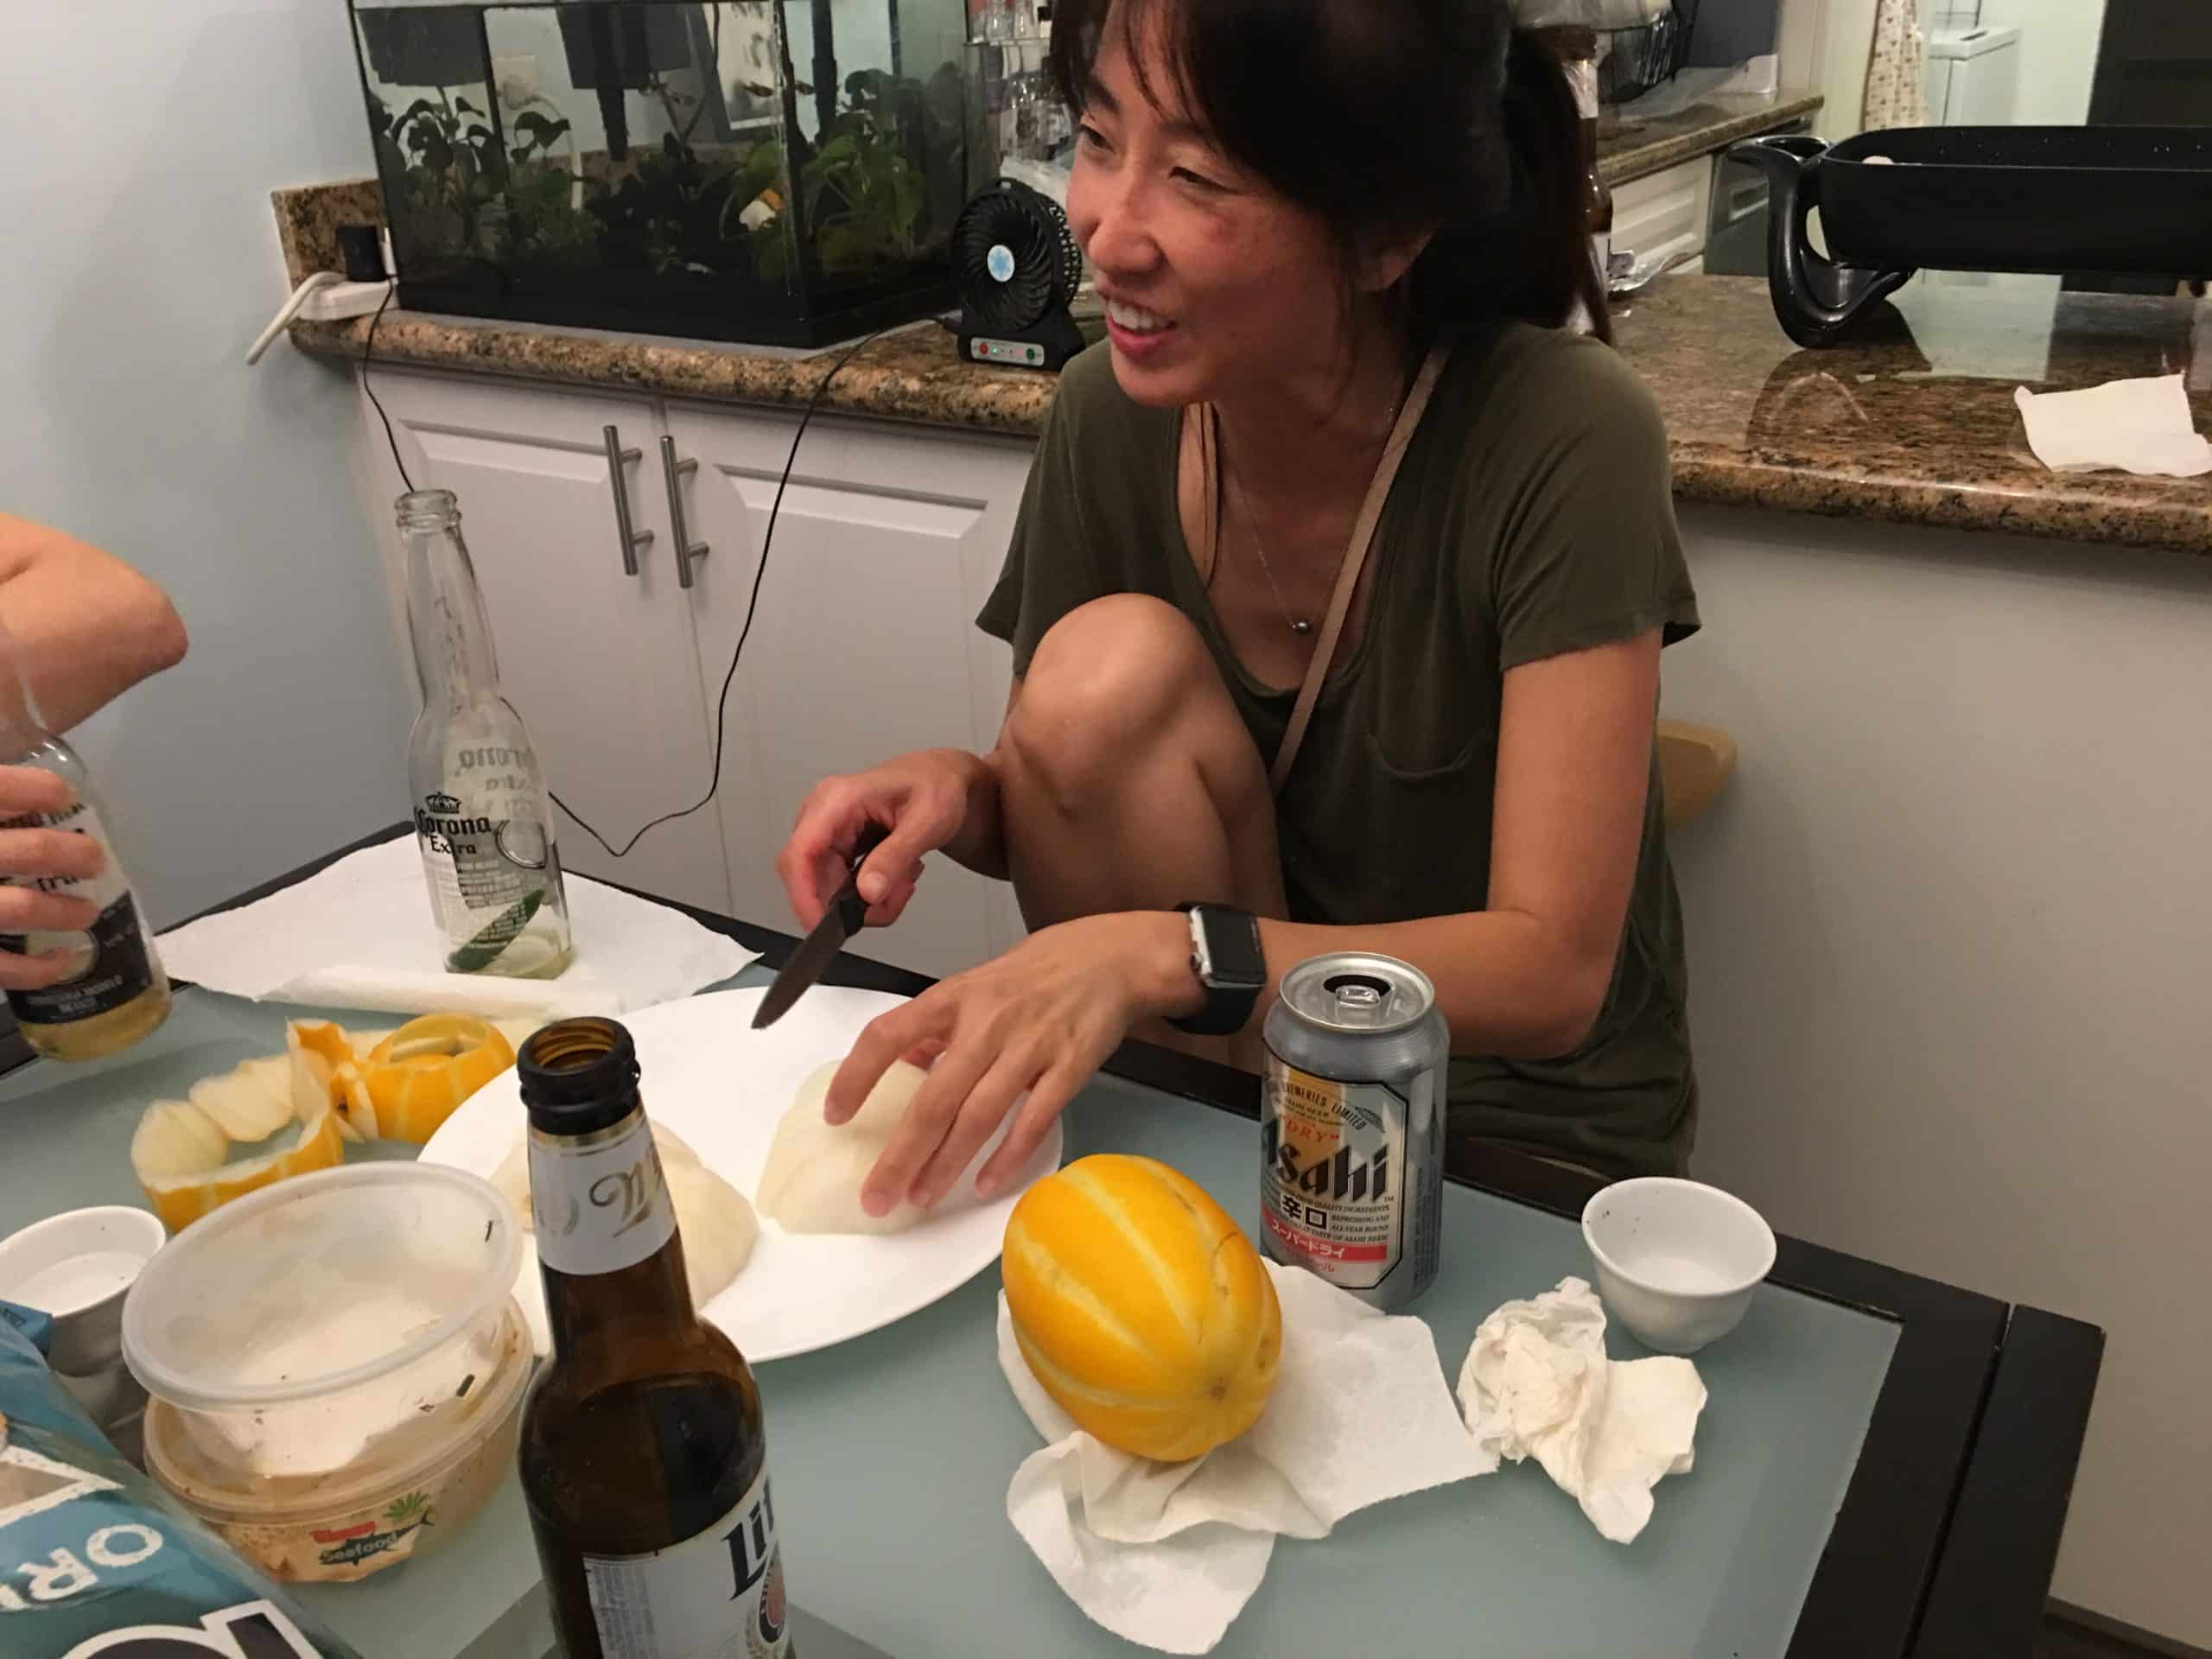 Lacey Kane cutting Korean pear